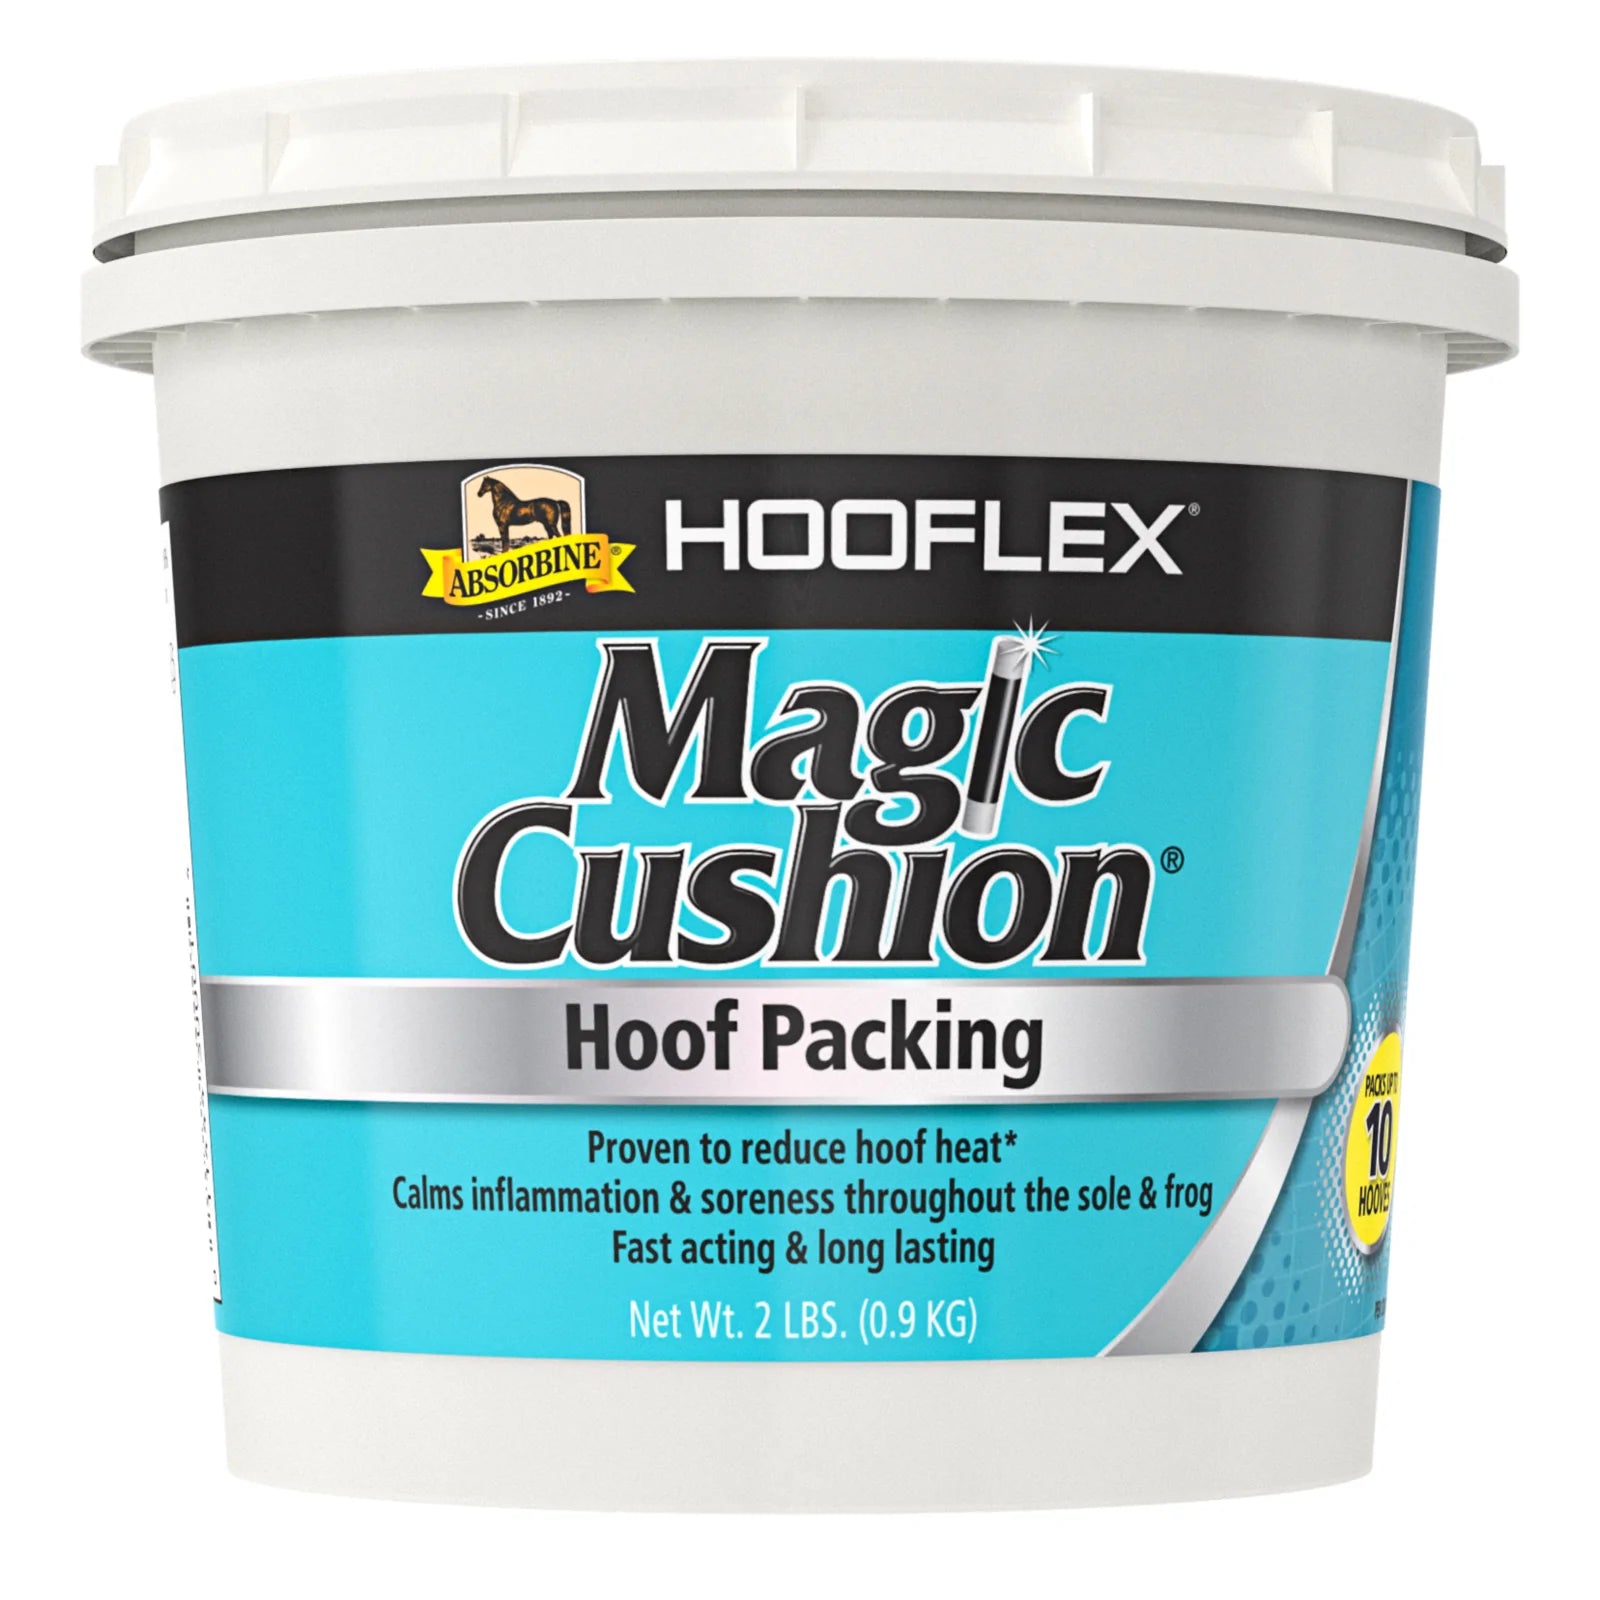 Hooflex Magic Cushion Hoof Packing